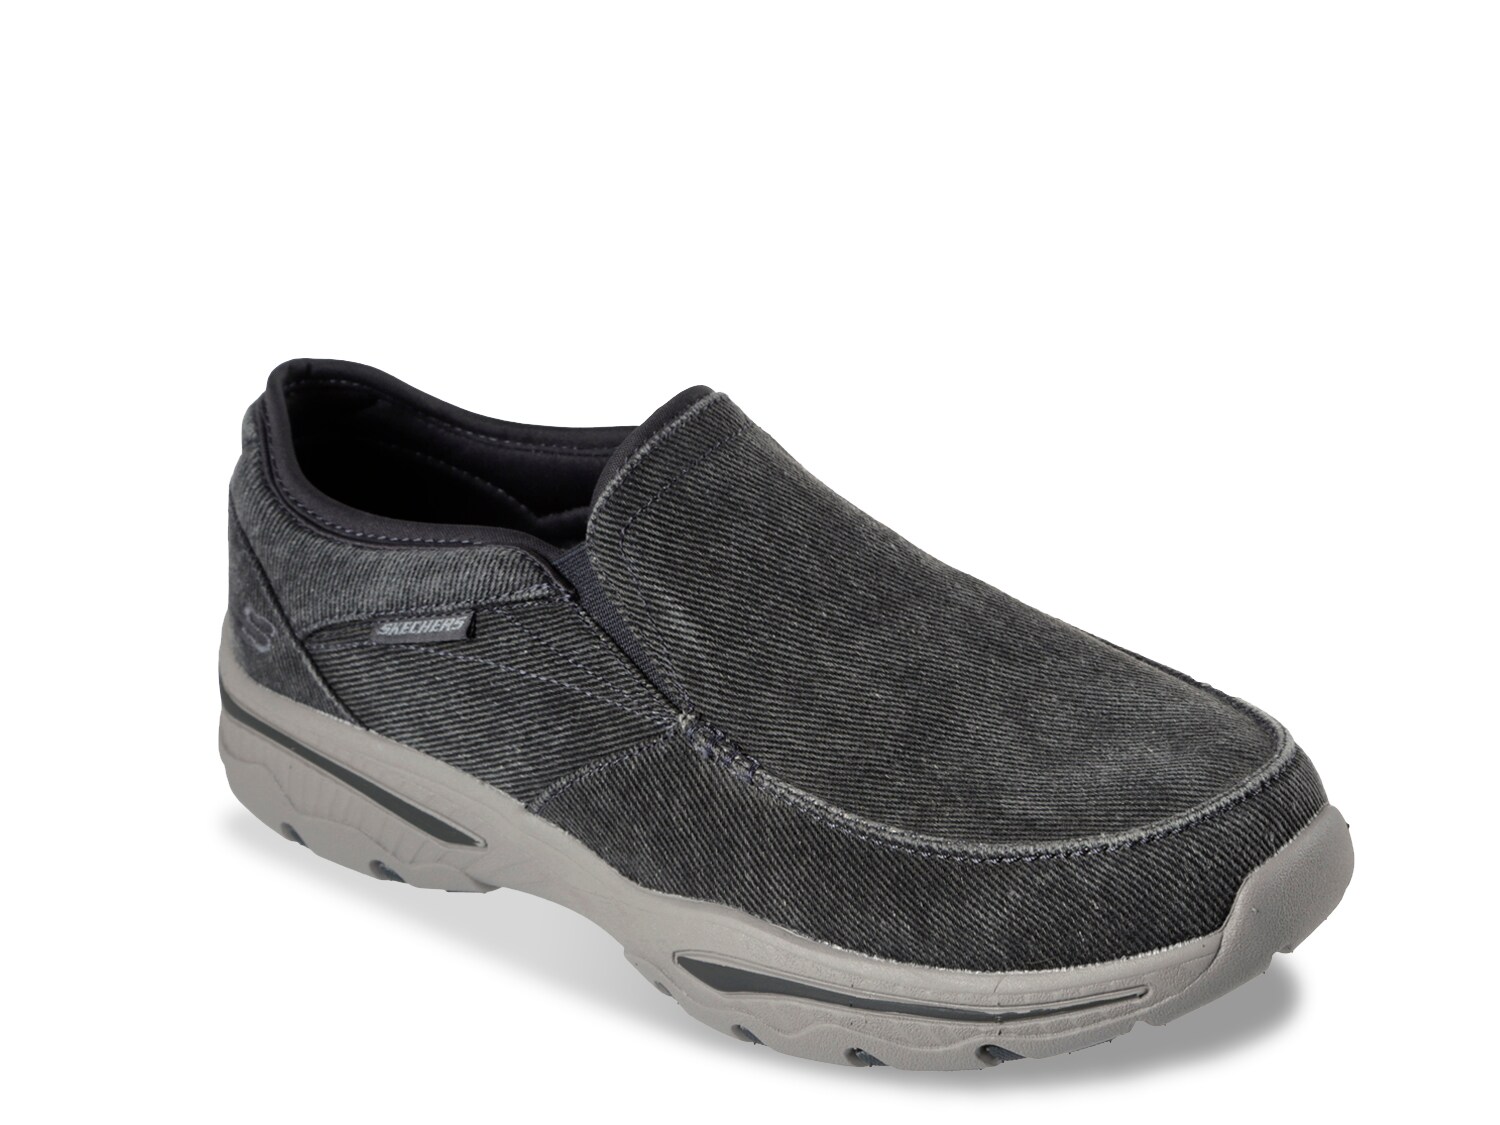 Skechers Shoes, Sandals, Slip Ons 